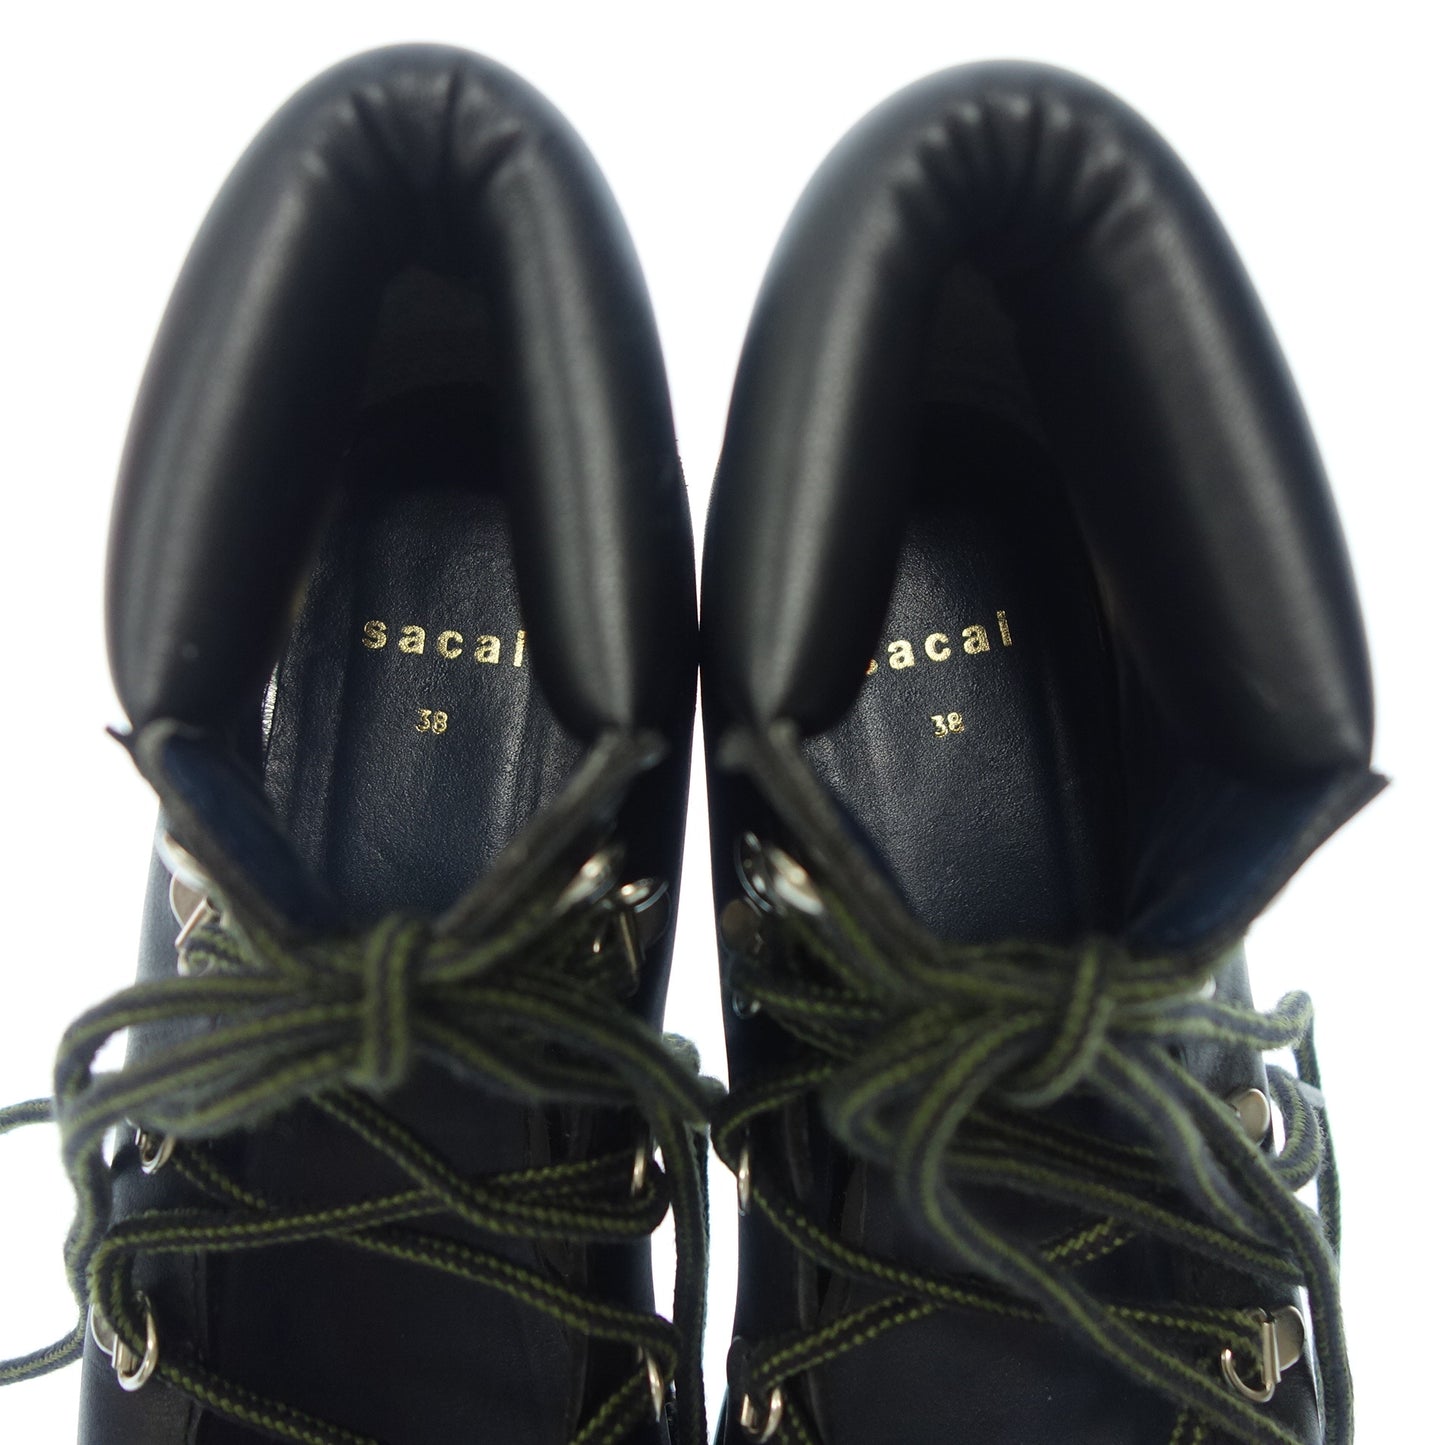 Sacai Leather Sandals Military Vibram Sole Women's Black 38 Sacai [AFC33] [Used] 